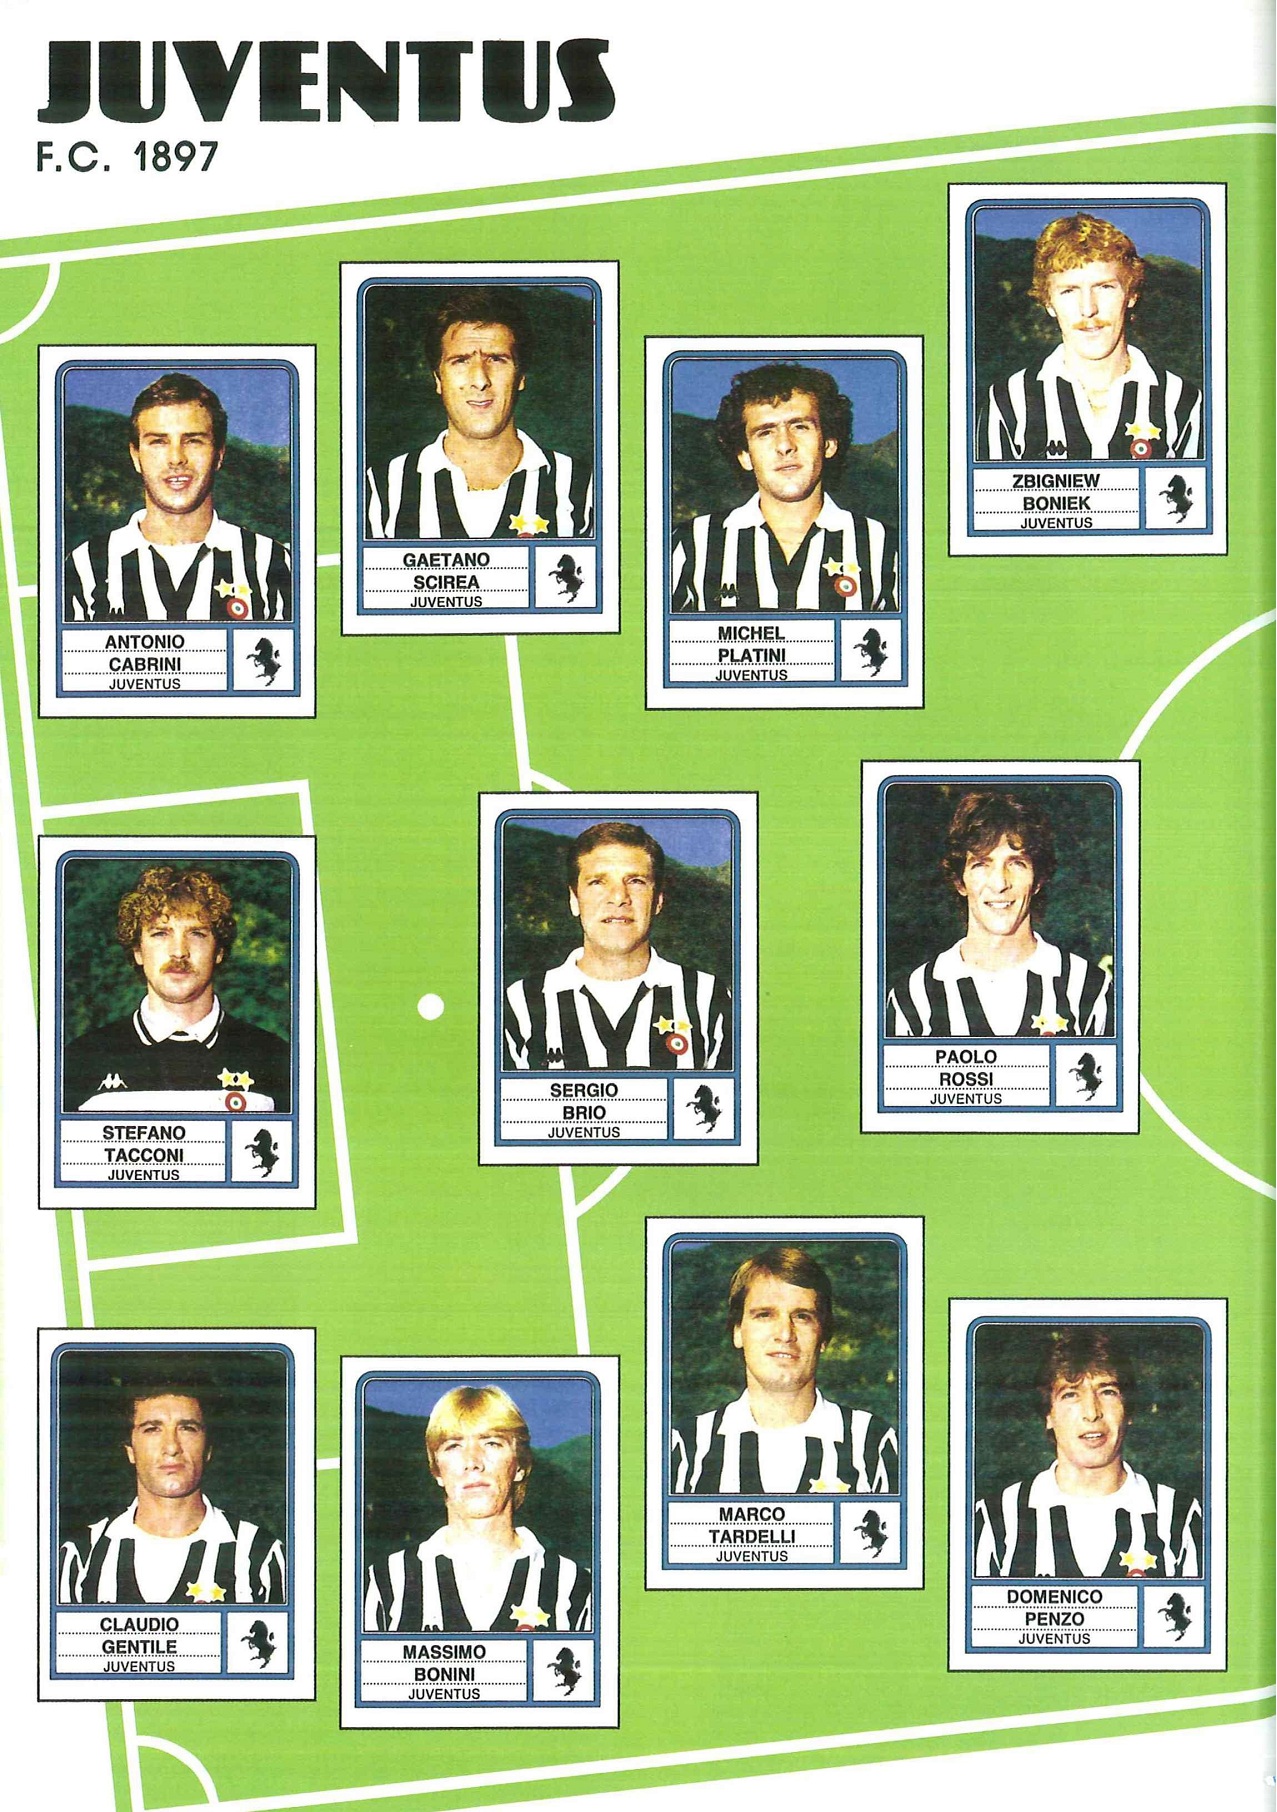 Claudio Gentile Juventus kit